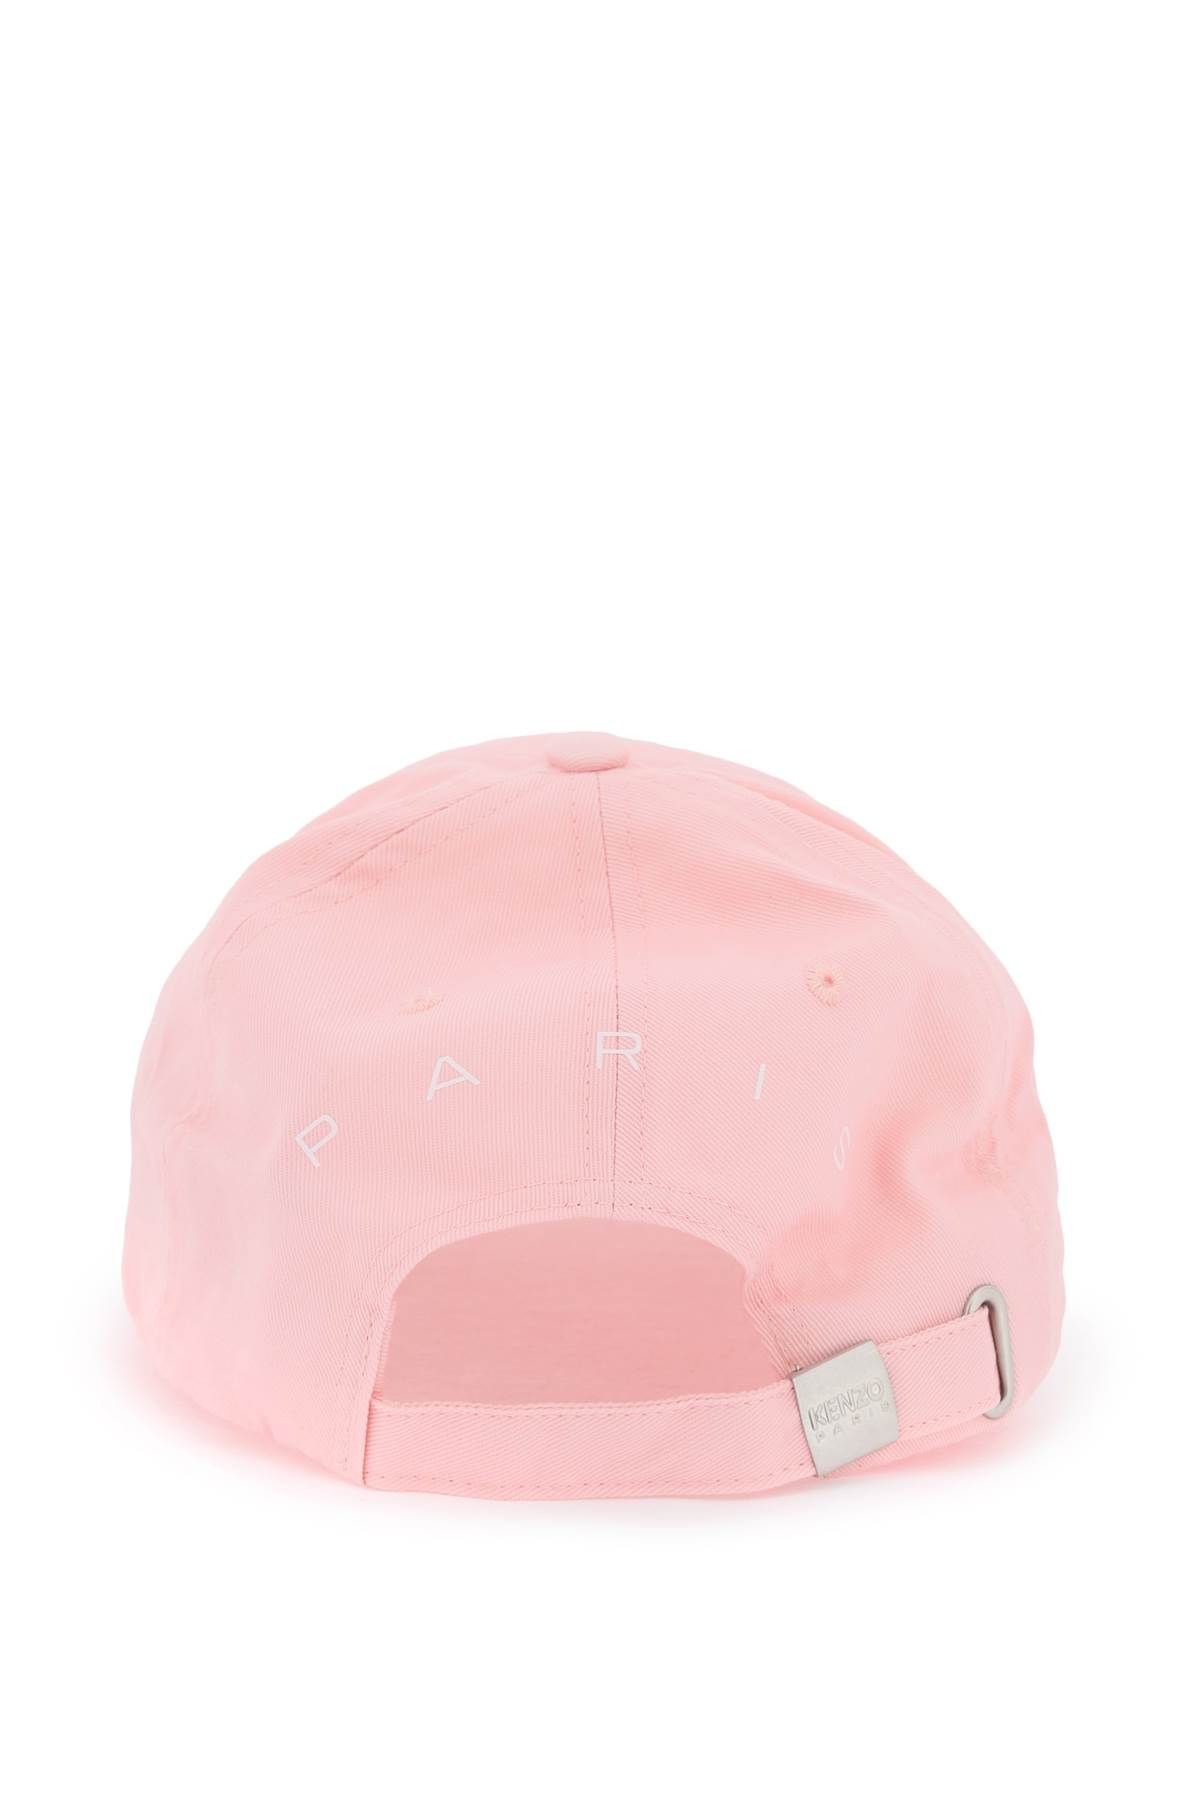 Shop Kenzo Graphy Baseball Cap In Pink